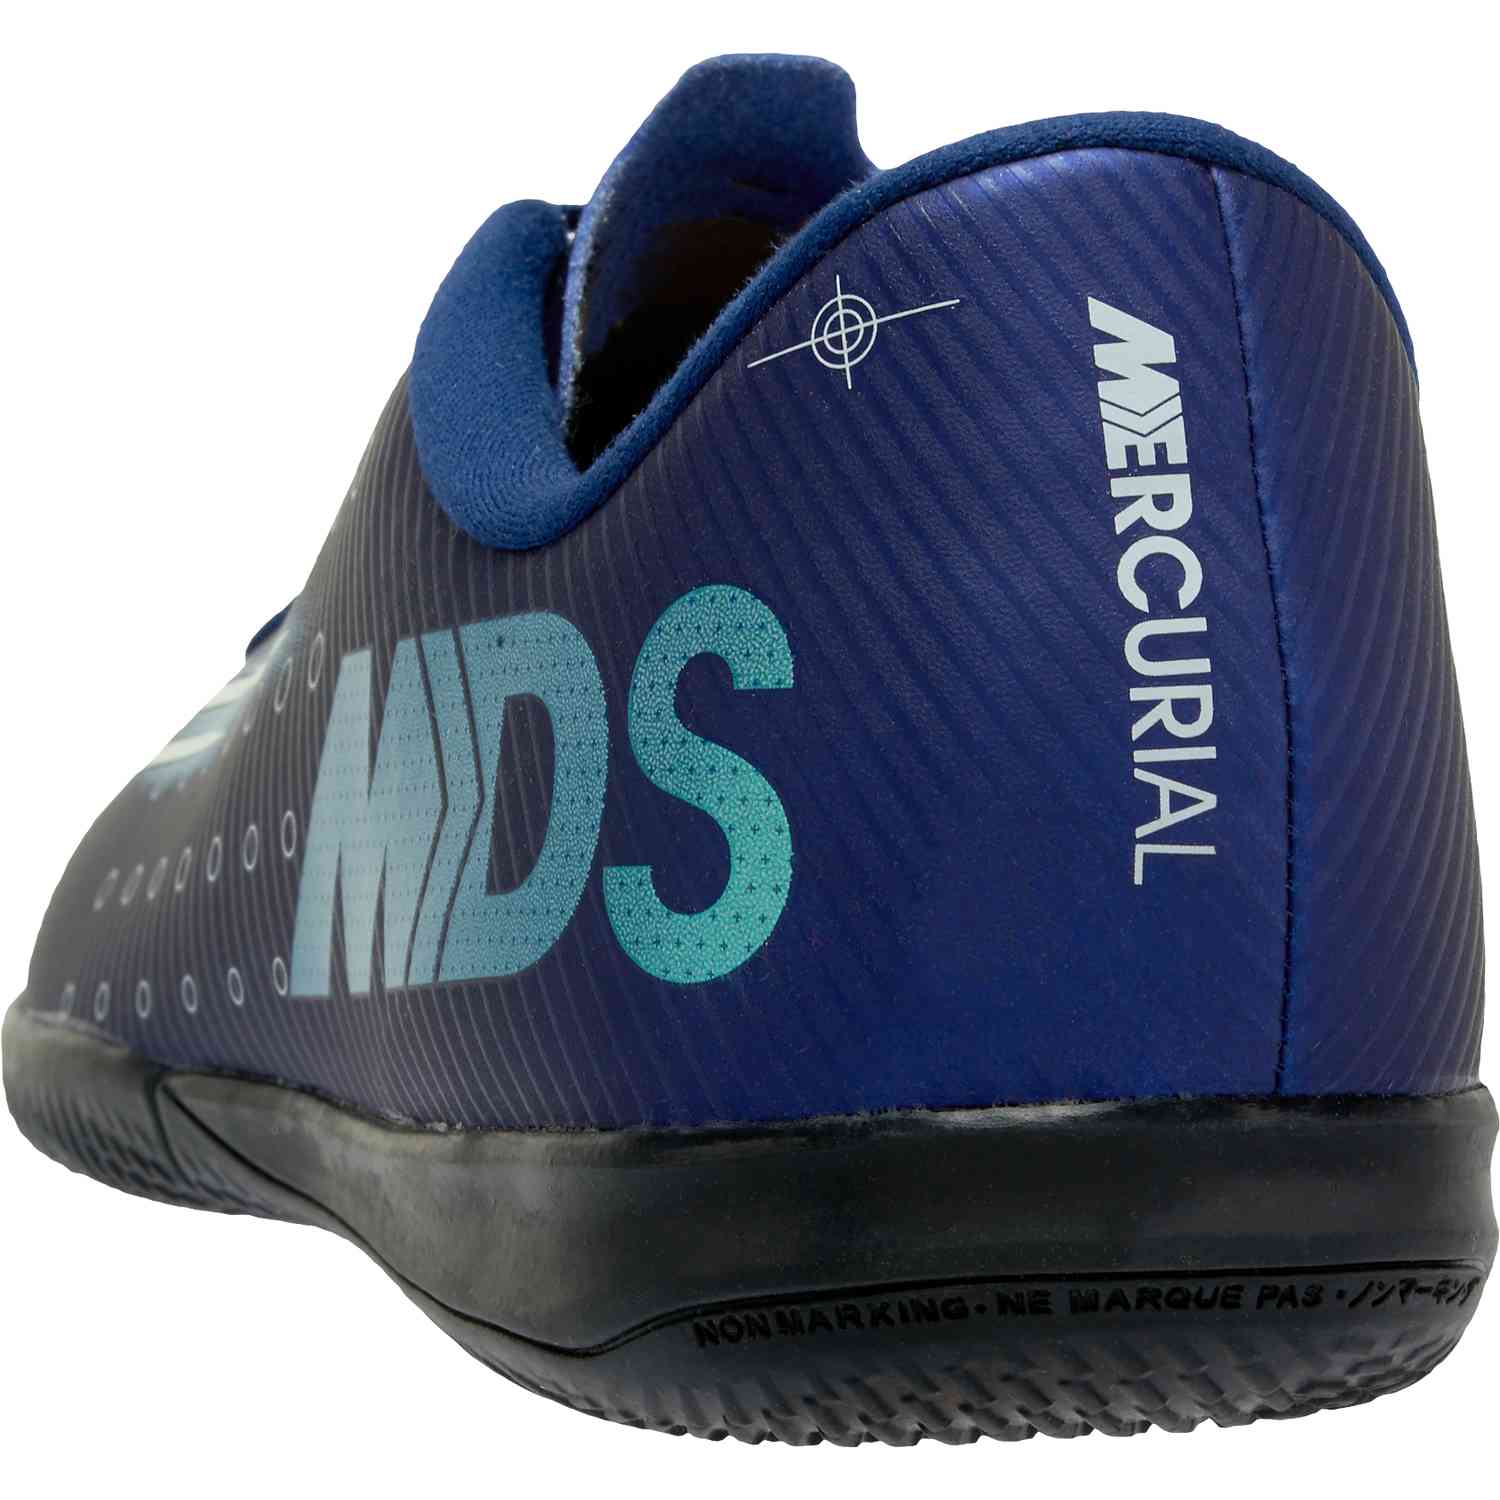 Kids Nike Mercurial Vapor 13 Academy IC - Dream Speed - SoccerPro